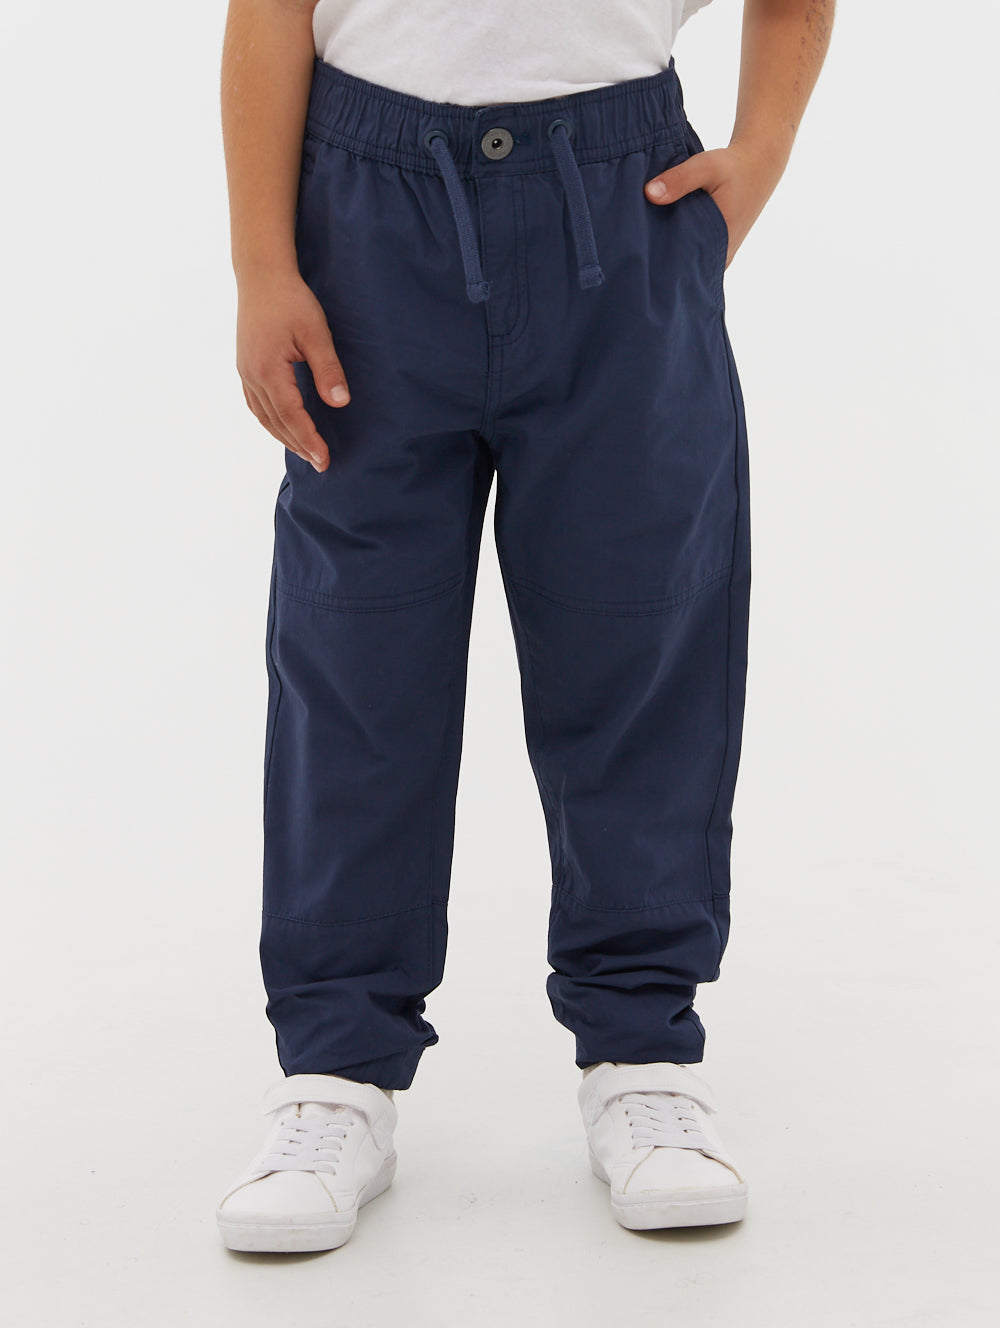 NoBo Juniors XL(15/17) Utility Jogger Pants Urban Khaki Elastic Waist  Cuffed Ank